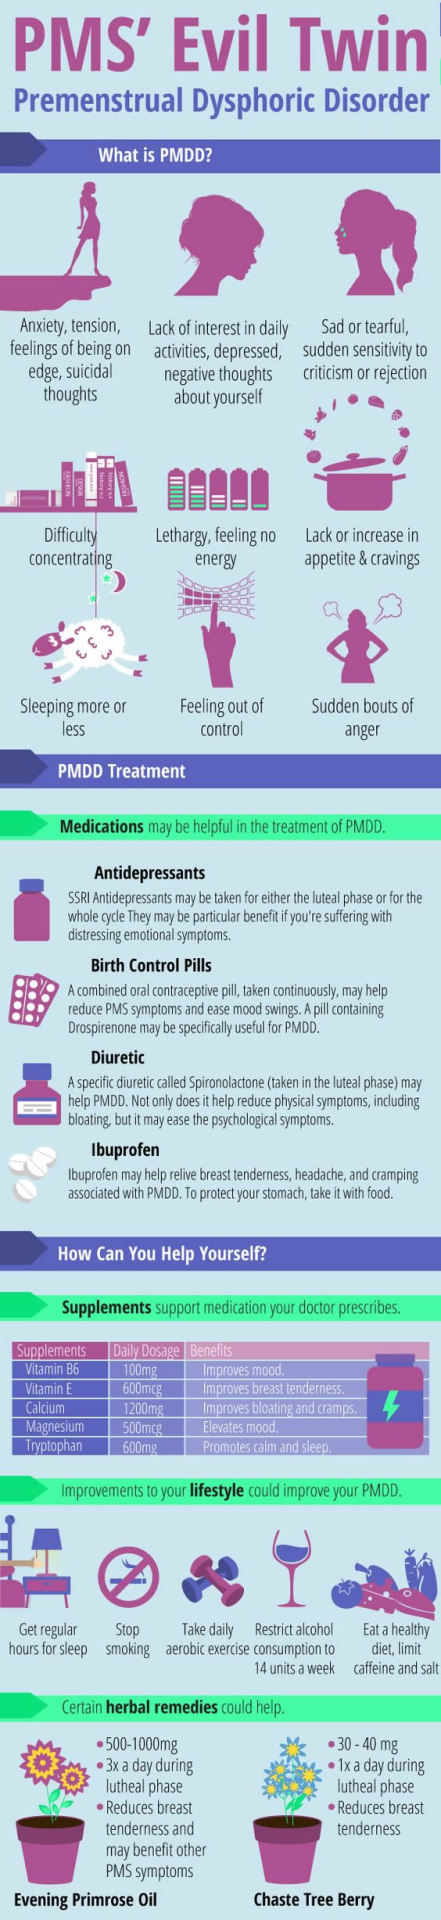 Premenstrual syndrome infographic